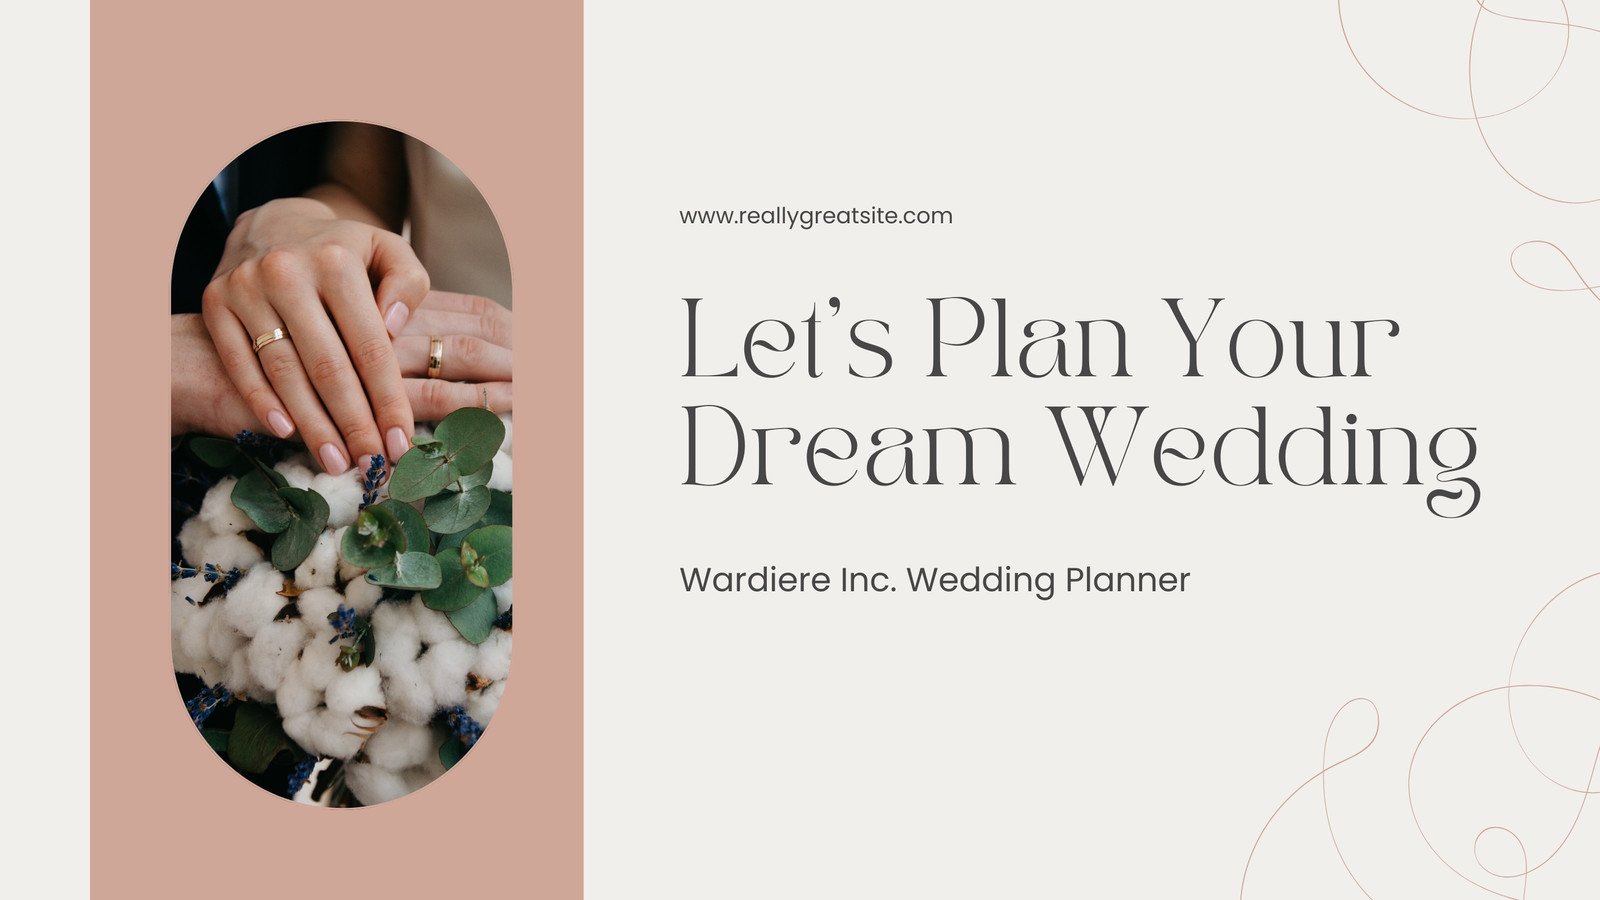 Wedding Planner Service Powerpoint Templates 